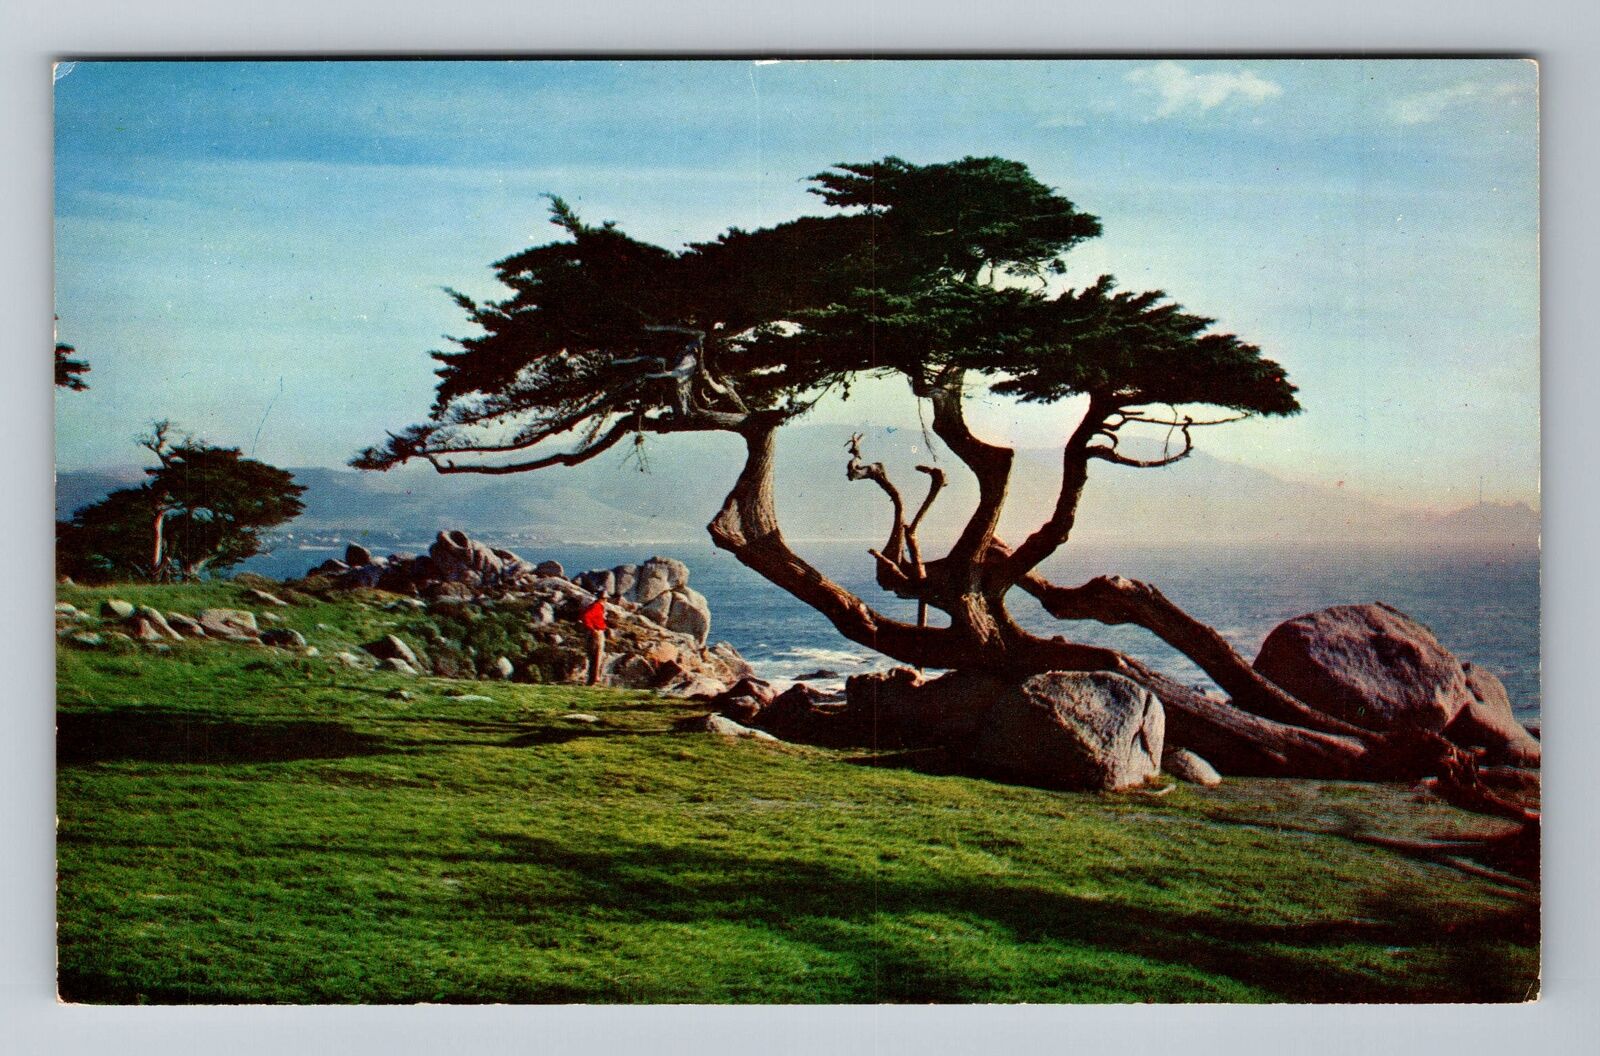 CA-California, Typical Cypress and Seaside, Lush Fairways, Vintage Postcard